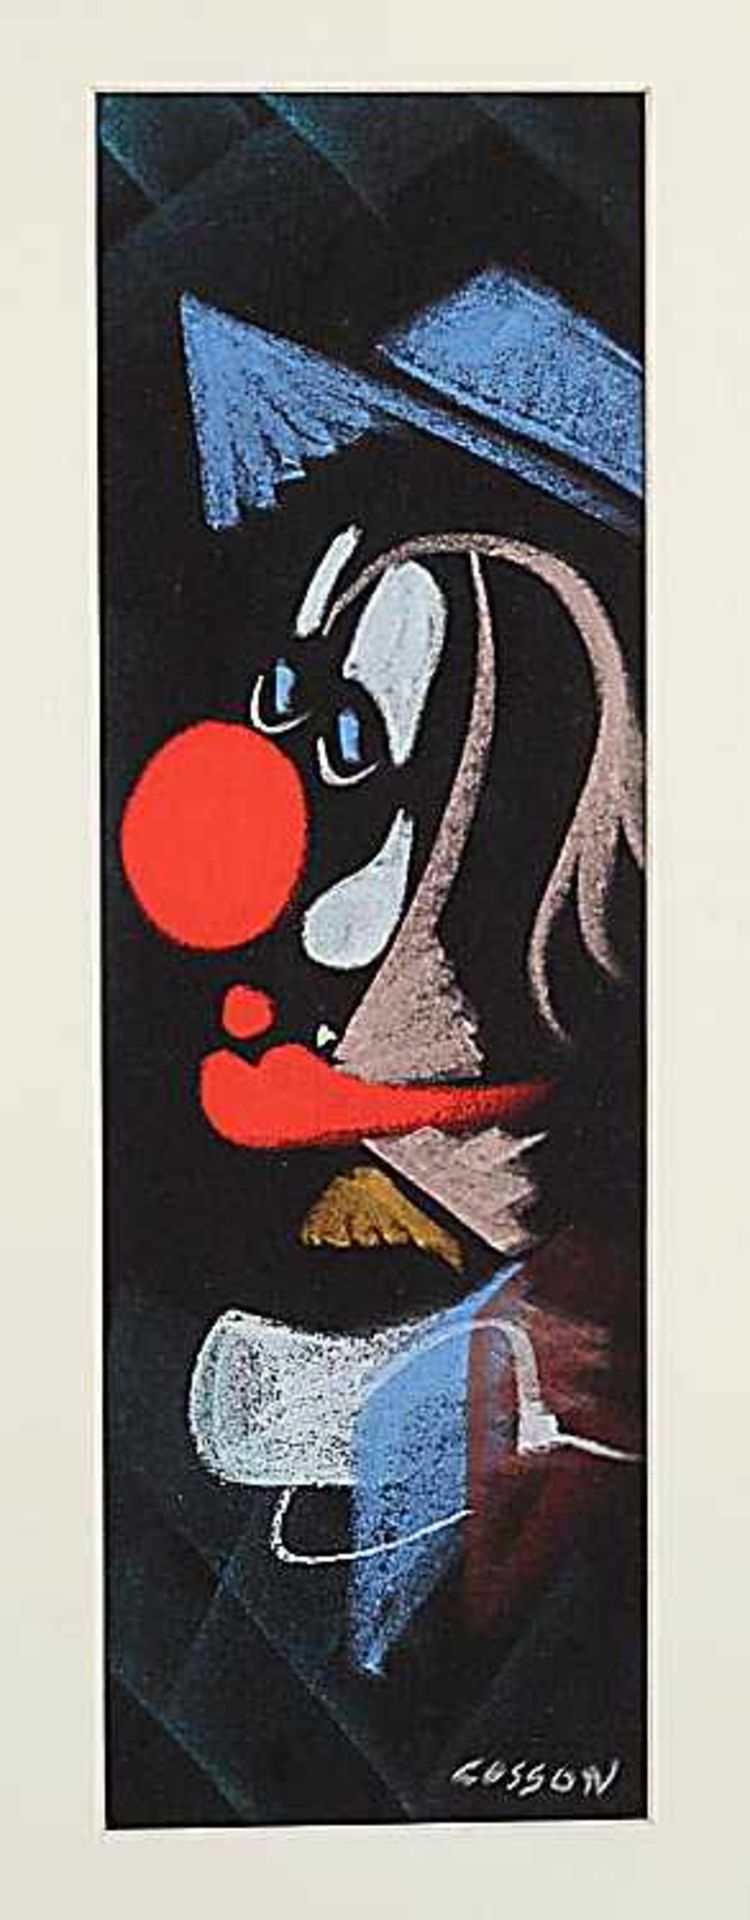 Cosson20. Jh..Clown.Re. u. bez. Cosson. Bunte Pastellkreide/schwarzem Papier, ca. 47 x 14,8 cm (